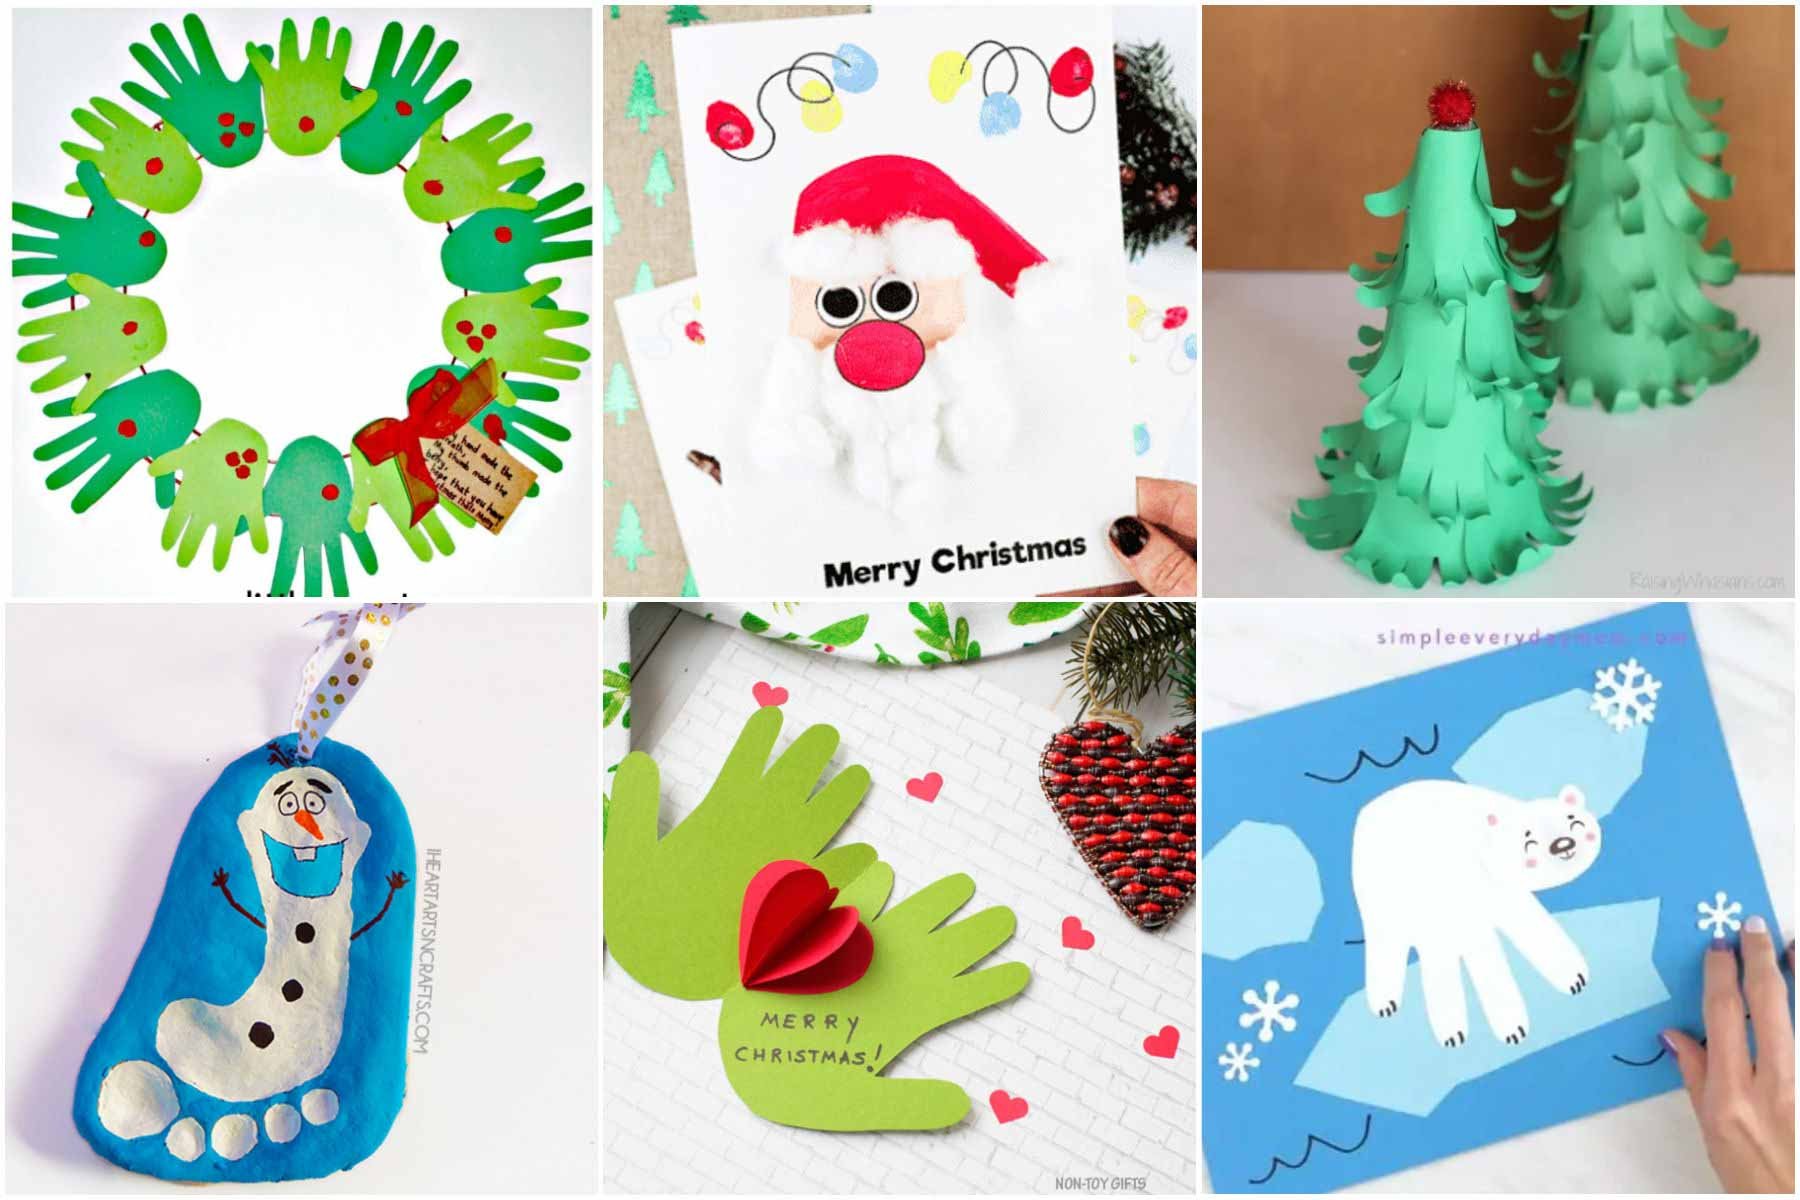 https://www.playpartyplan.com/wp-content/uploads/2022/12/Christmas-handprint-crafts-collage.jpg